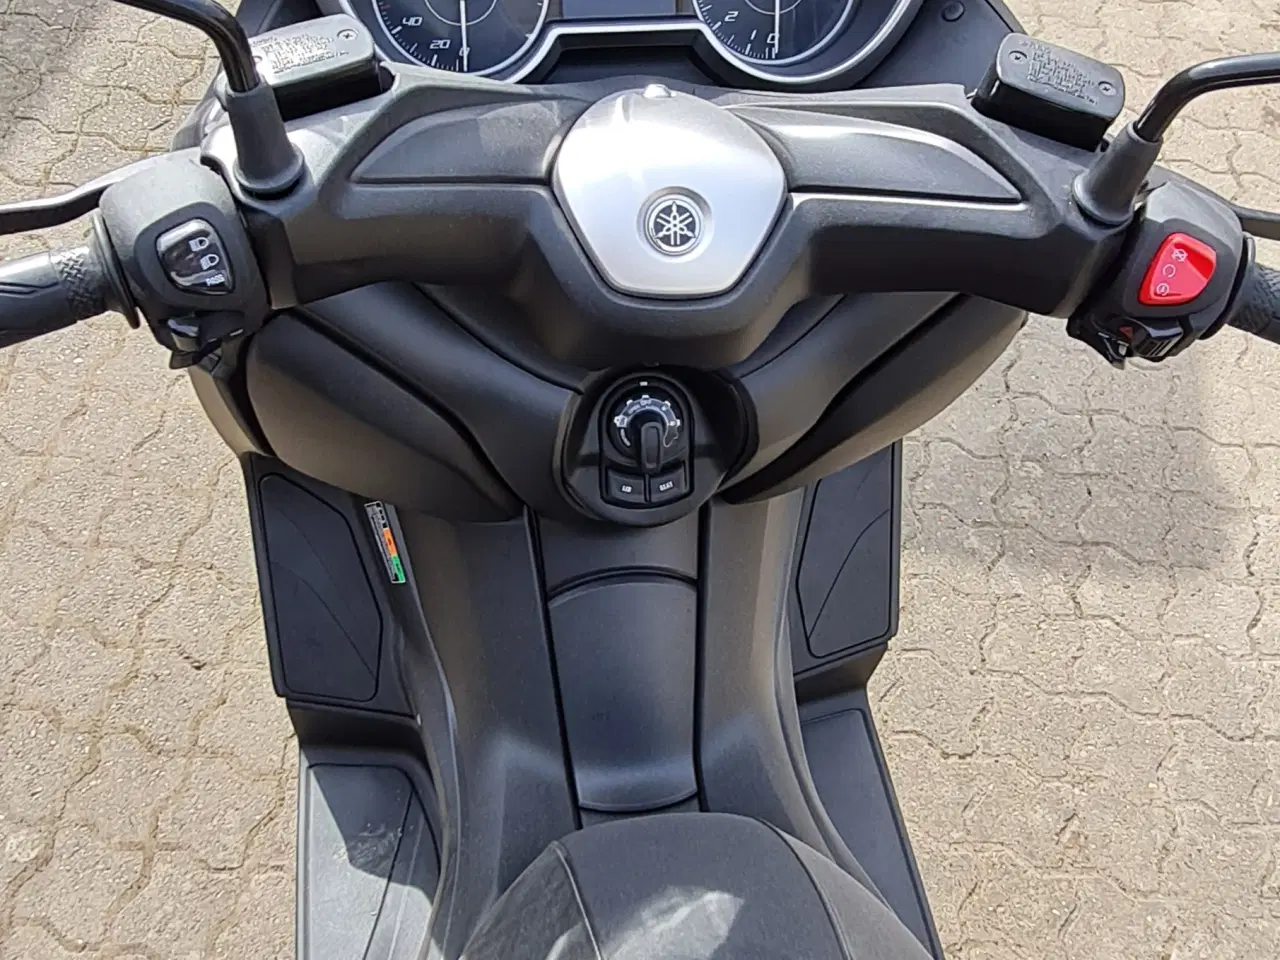 Billede 4 - Motorcykel yamaha x max scooter 300